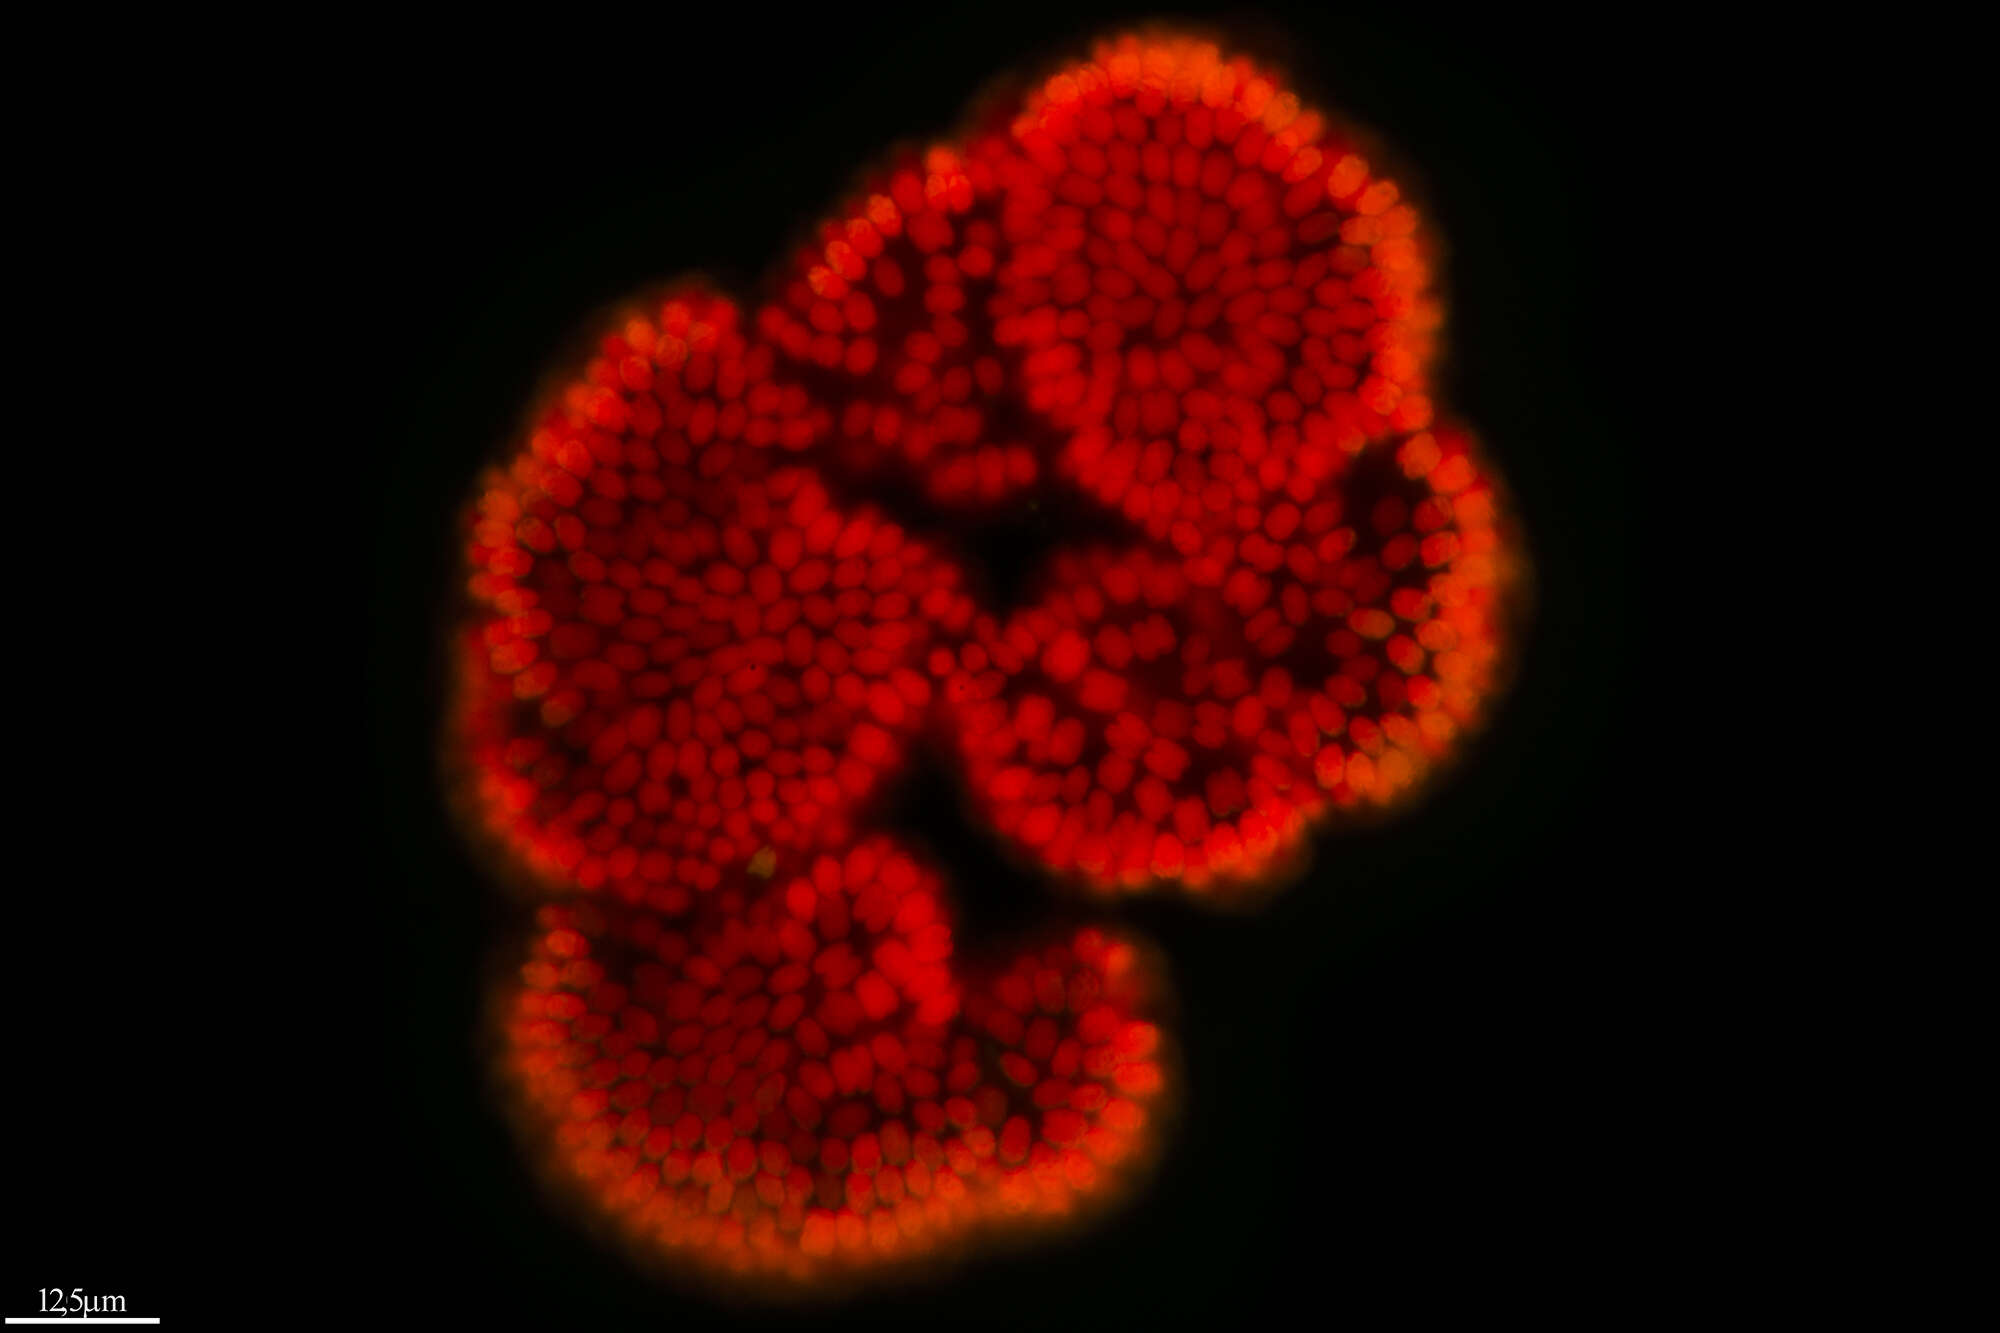 Image de Microcystis botrys